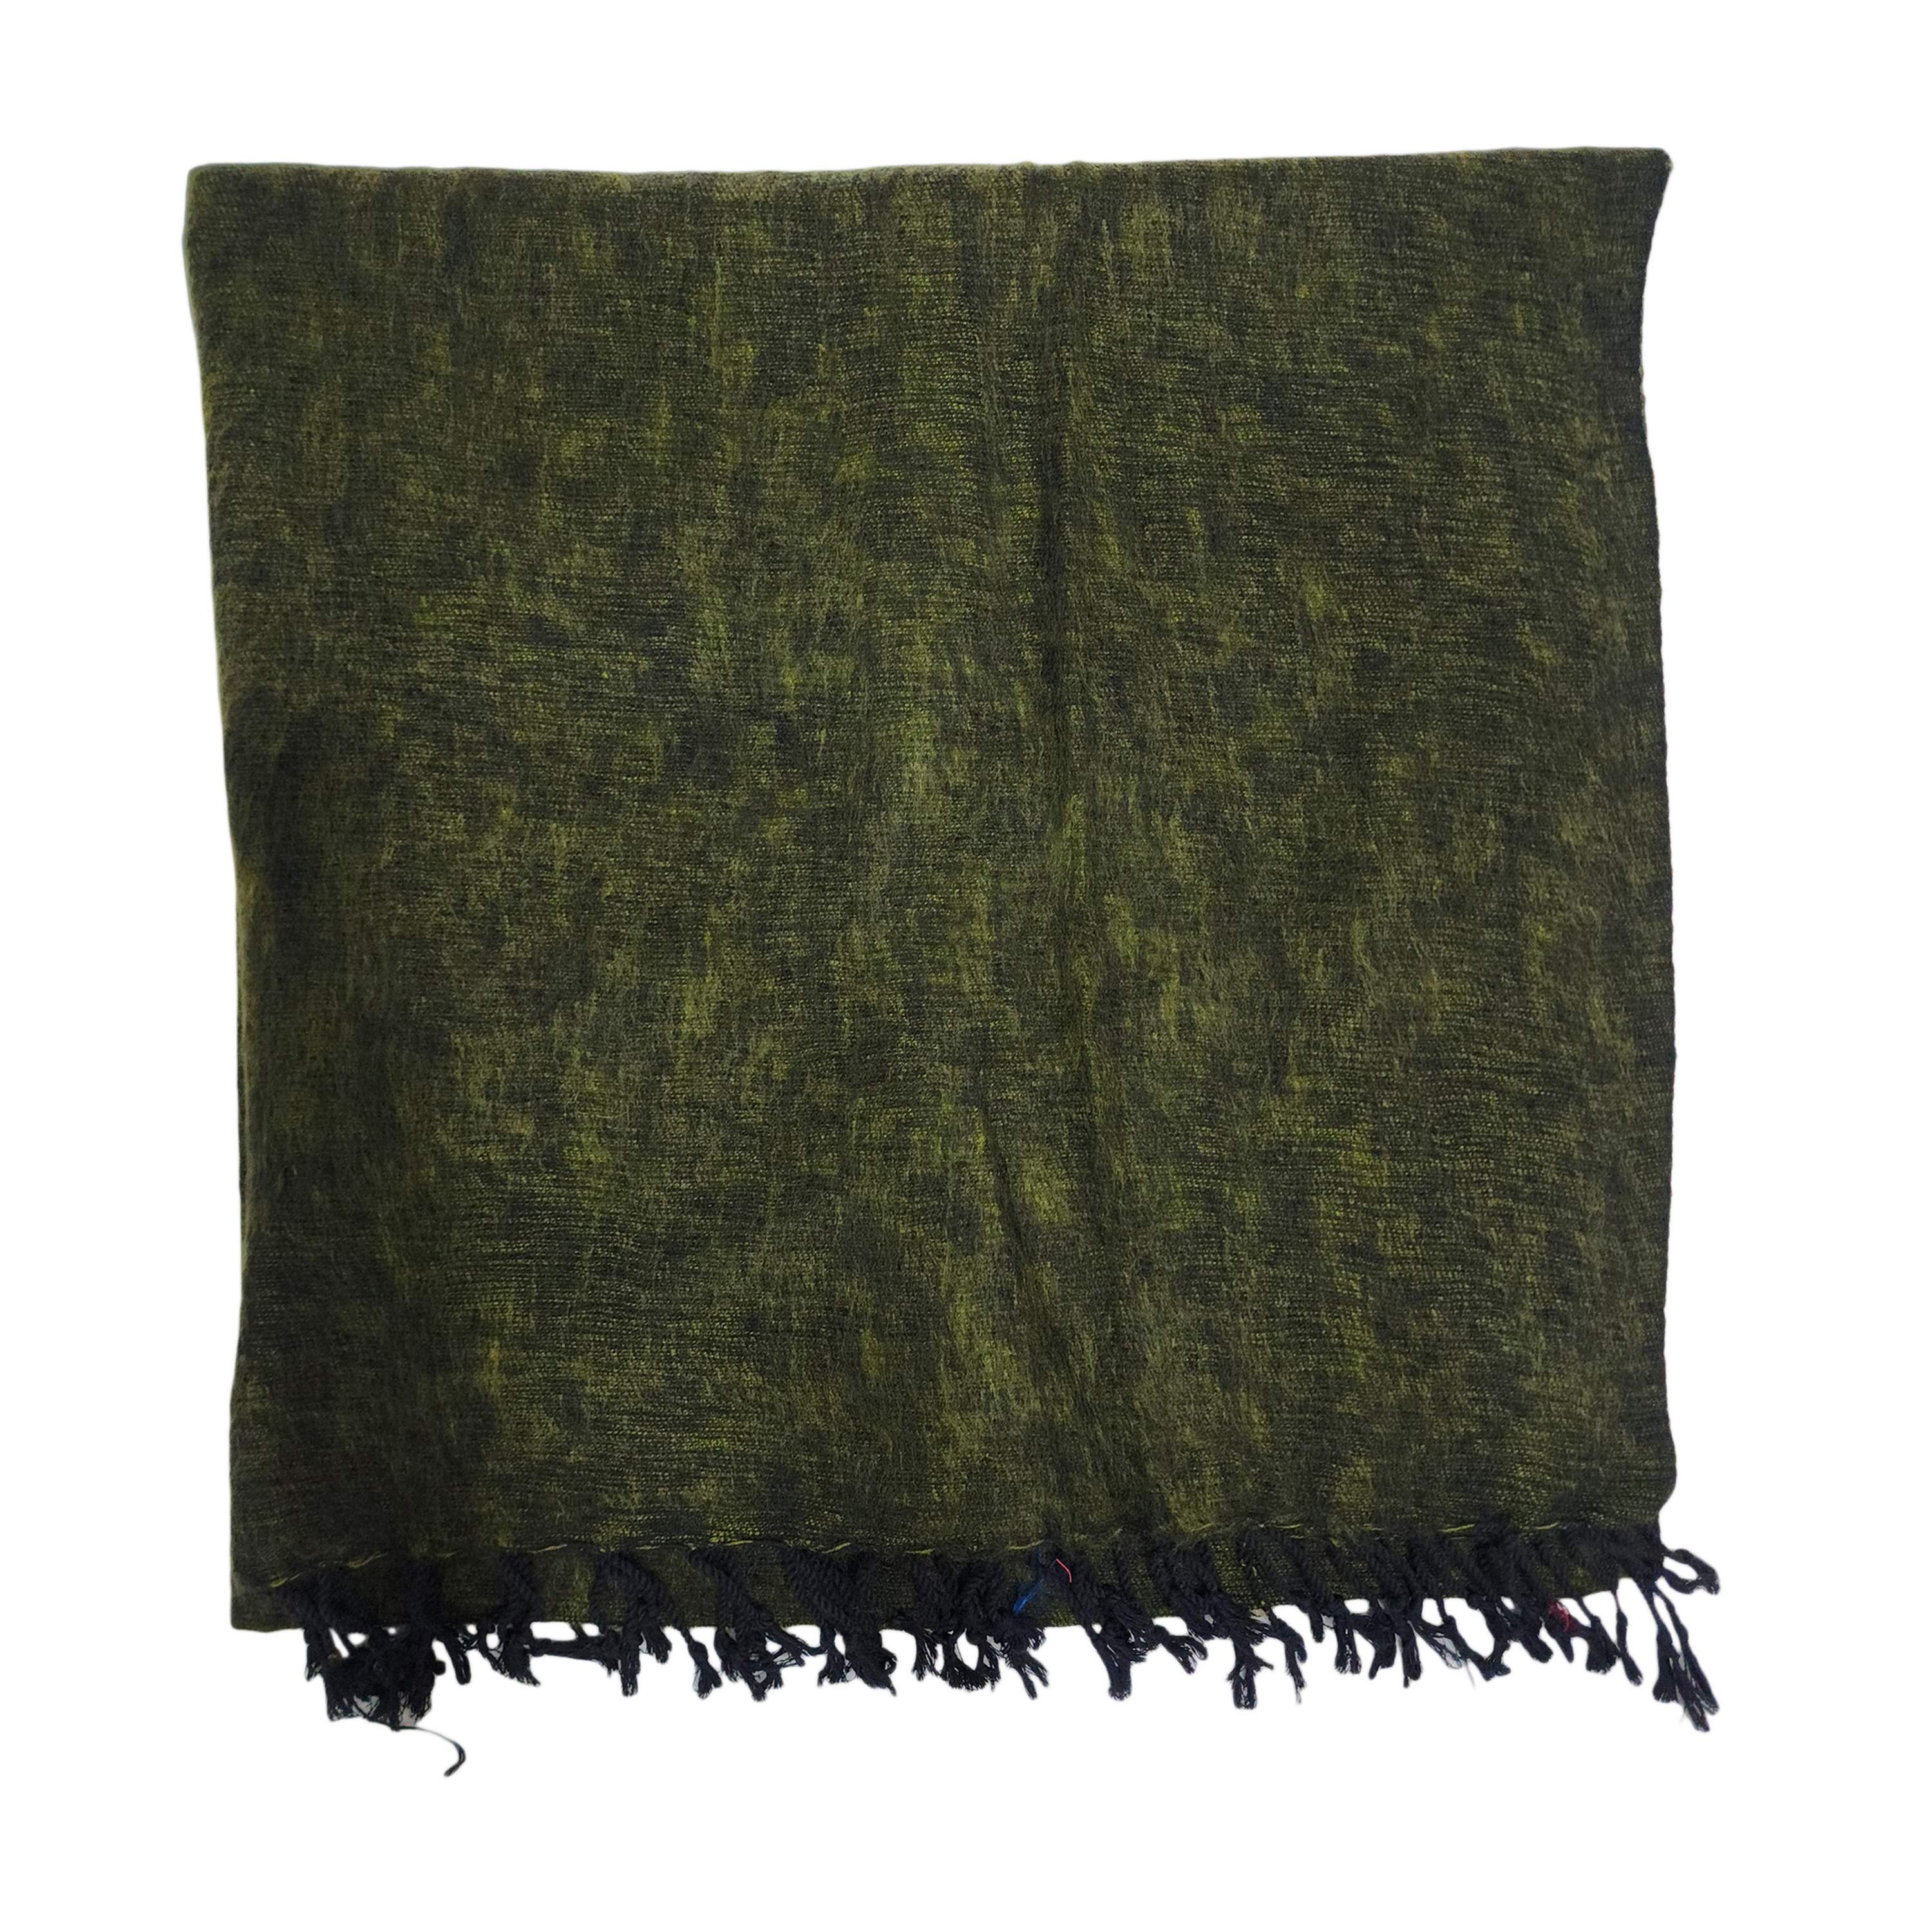 Yak Wool Blanket, Nepali Acrylic Hand Loom Blanket, Color olive Drab